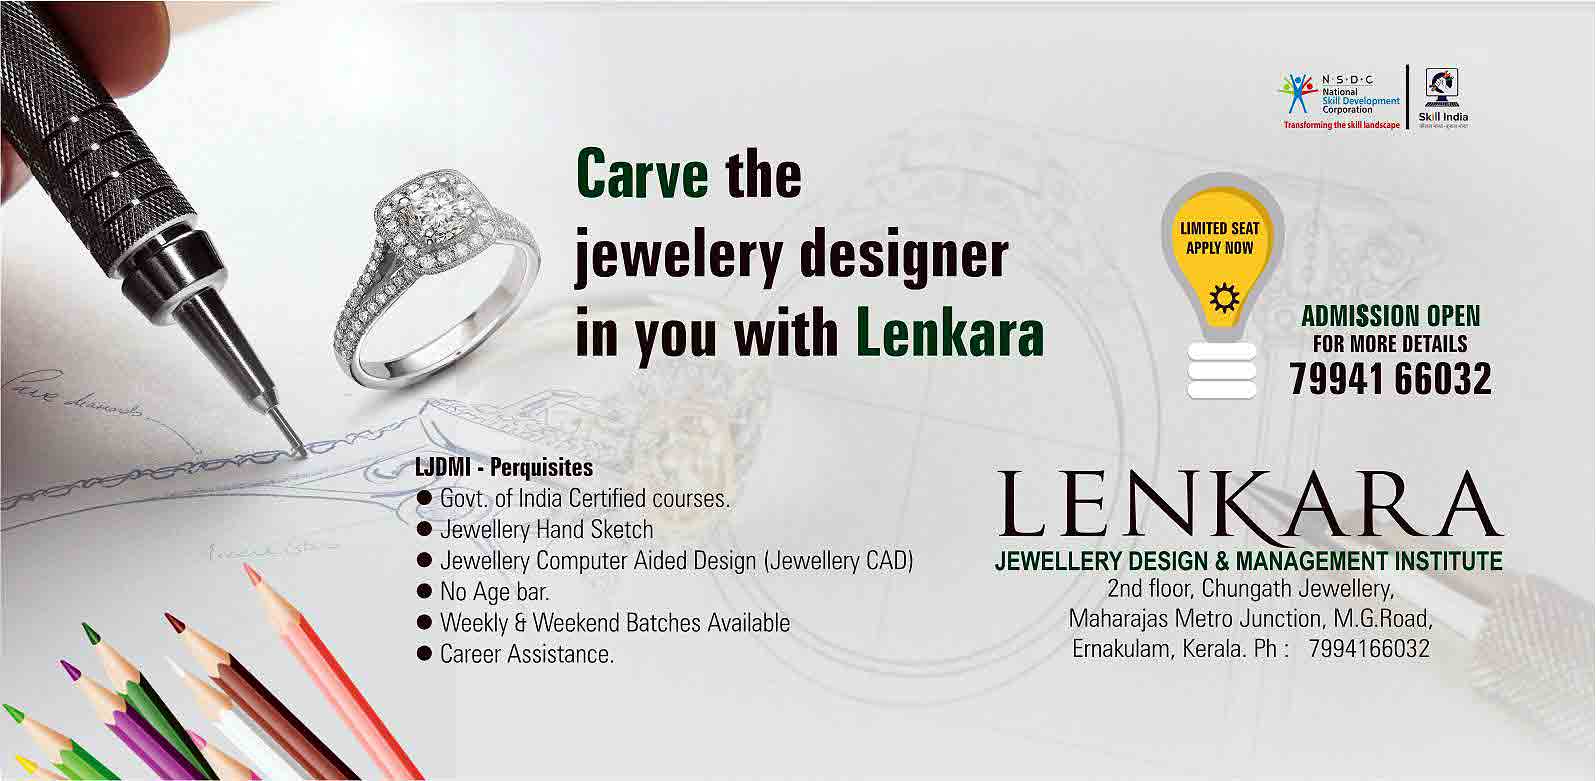 Lenkara Jewelry Design & Management Institute